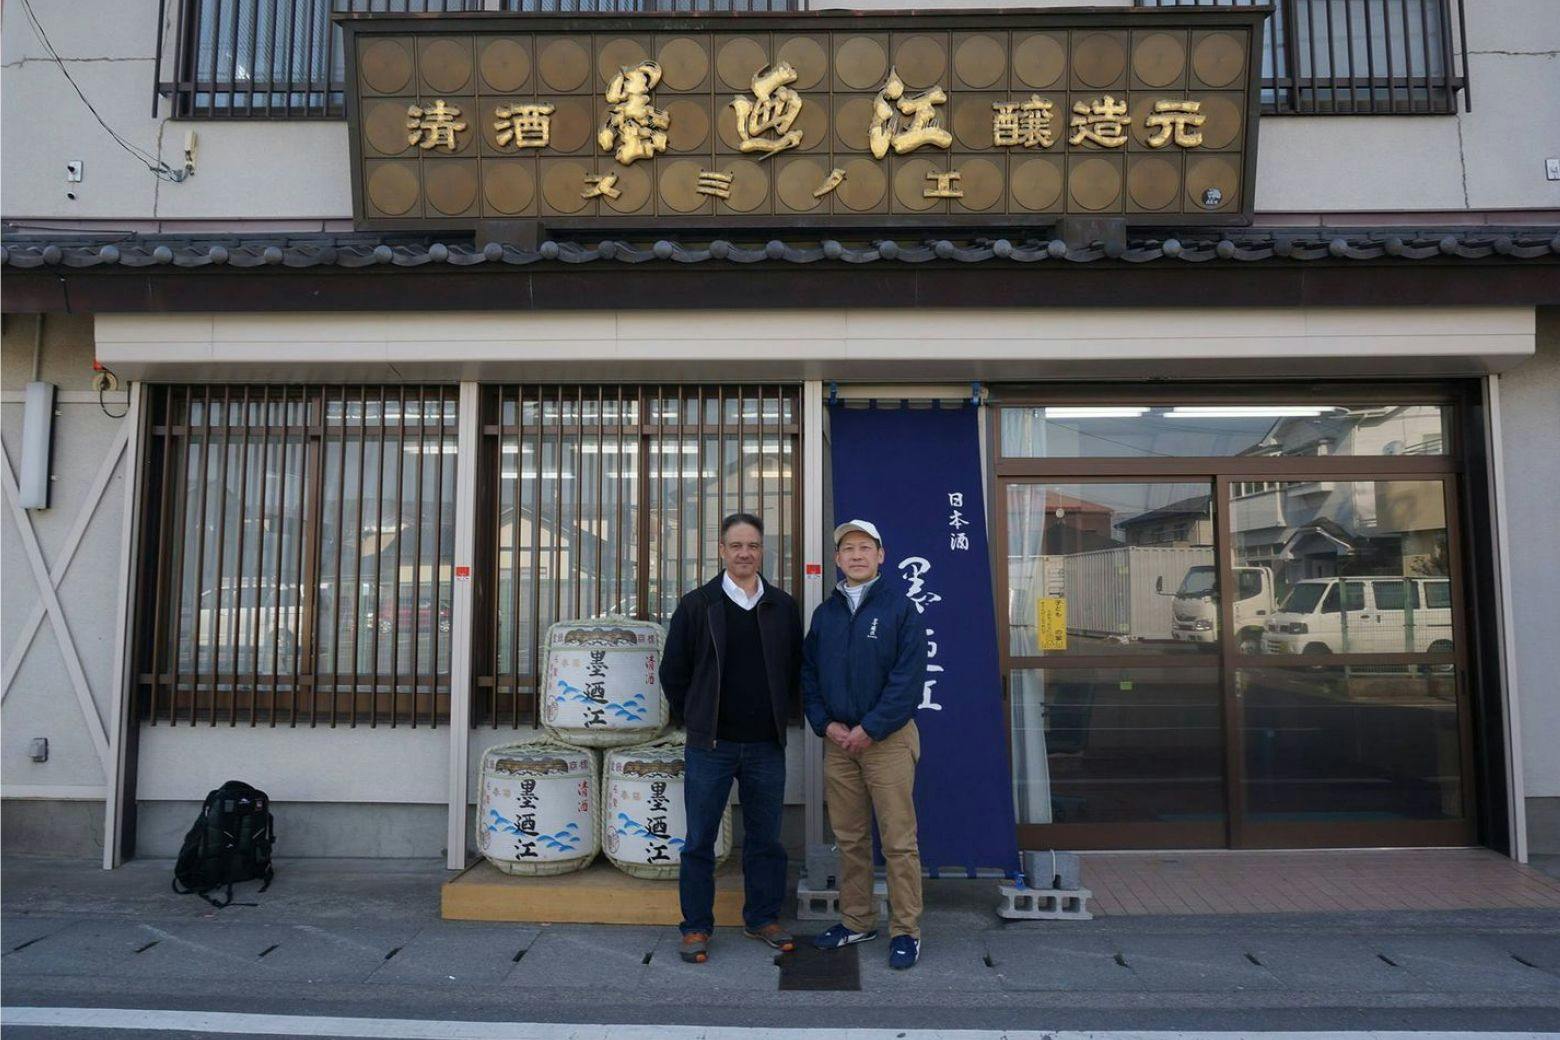 John visiting Suminoe Brewing Company in Miyagi Prefecture